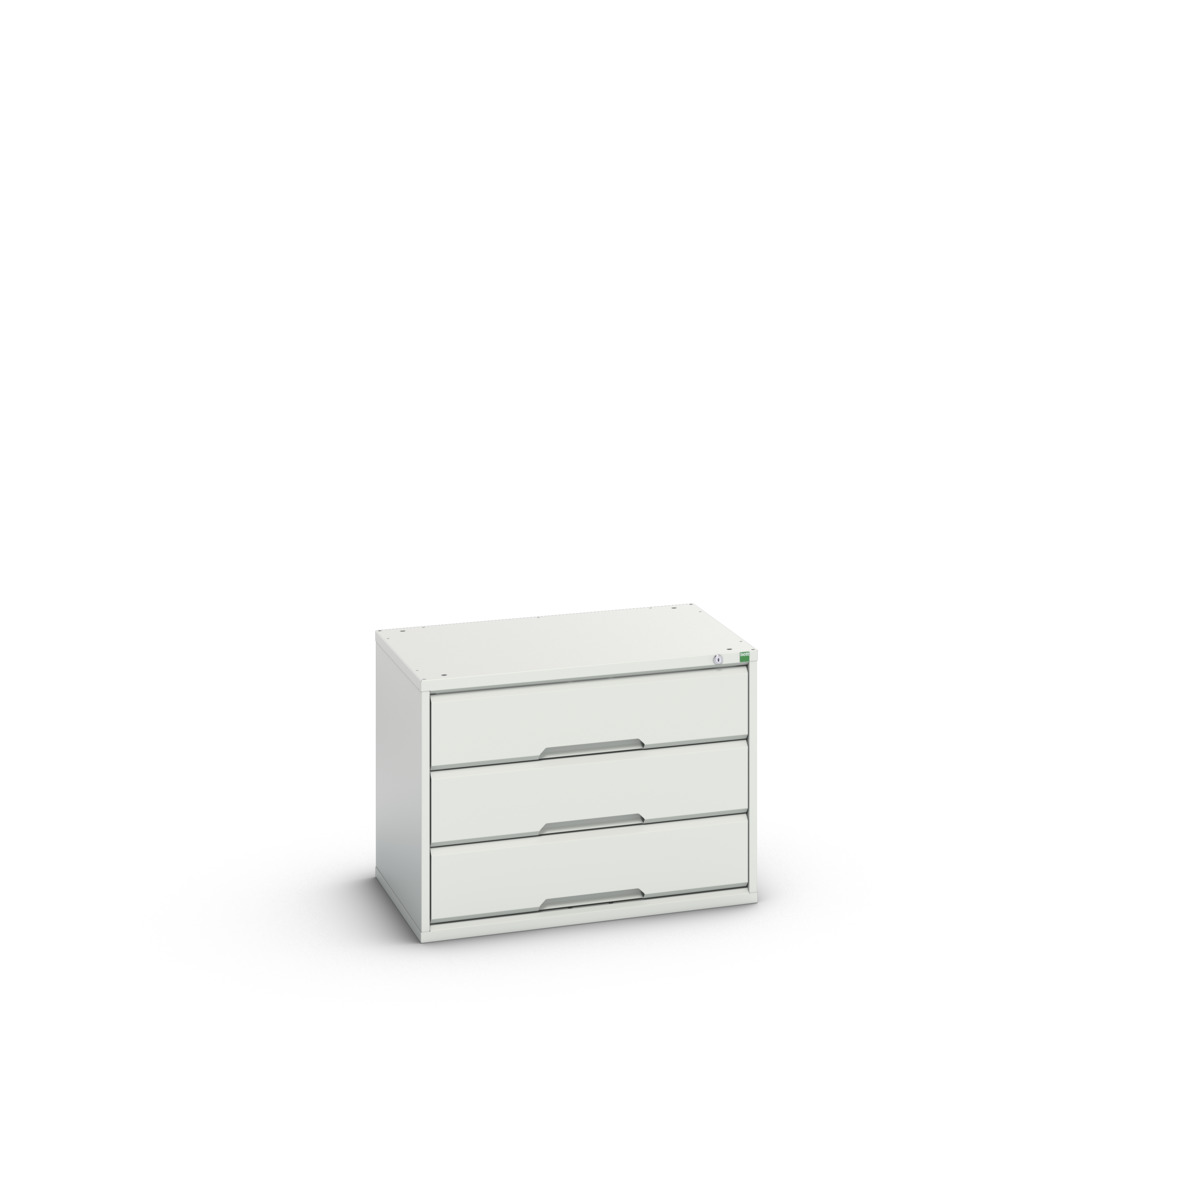 16925103.16 - verso drawer cabinet